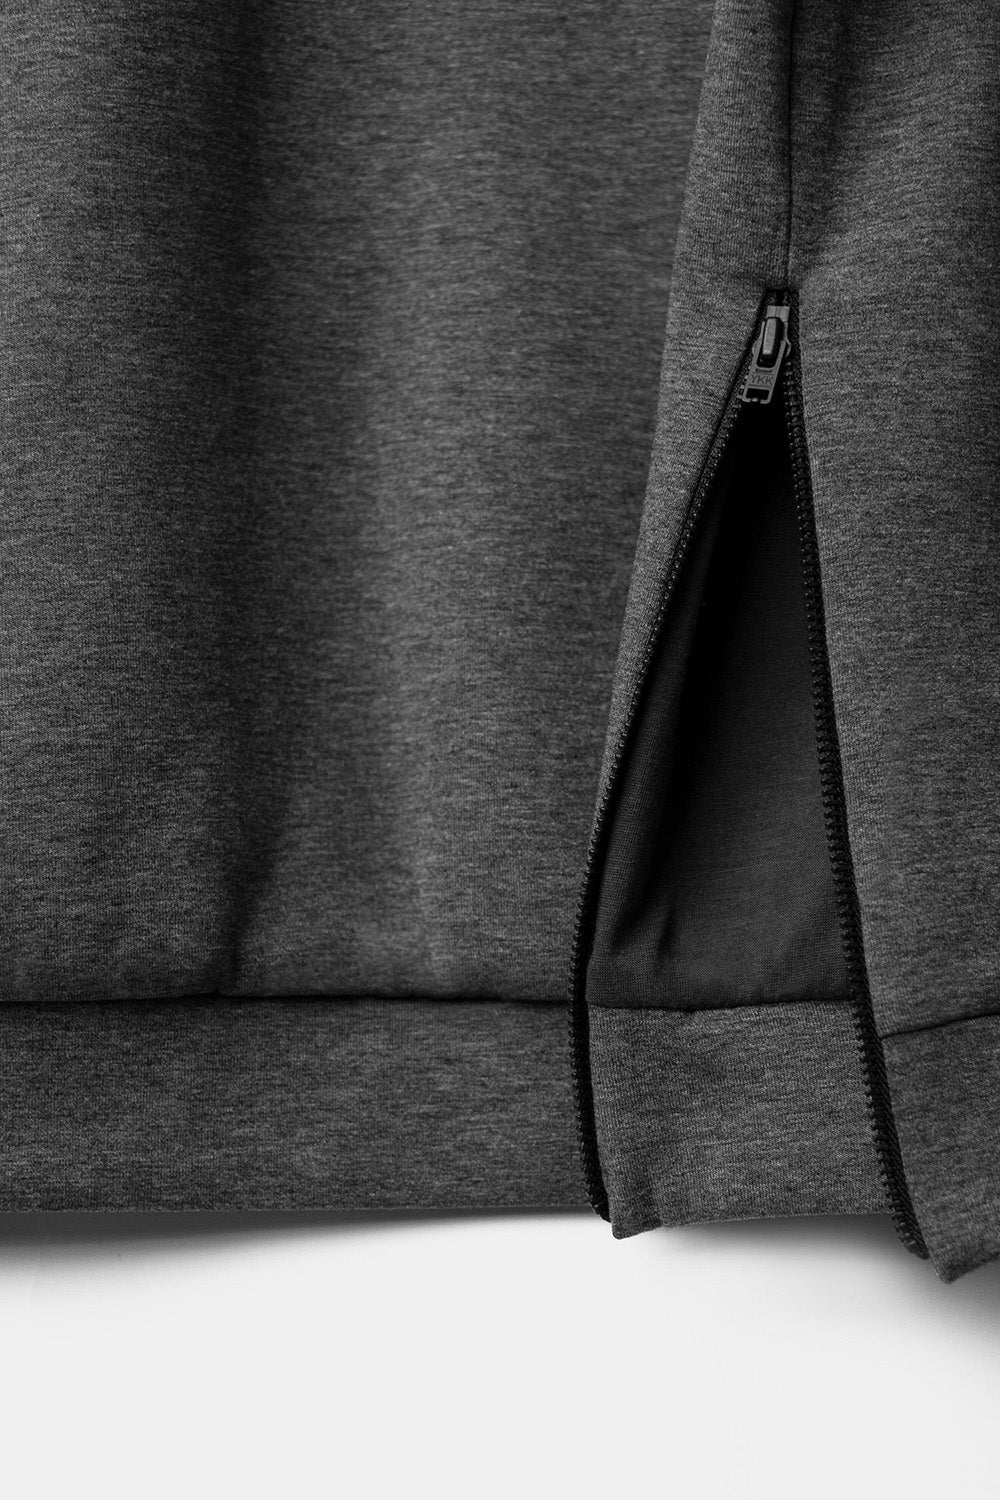 SEANNUNG - MEN - Cotton Sweatshirt With Zipped Sides 側邊拉鍊大學T